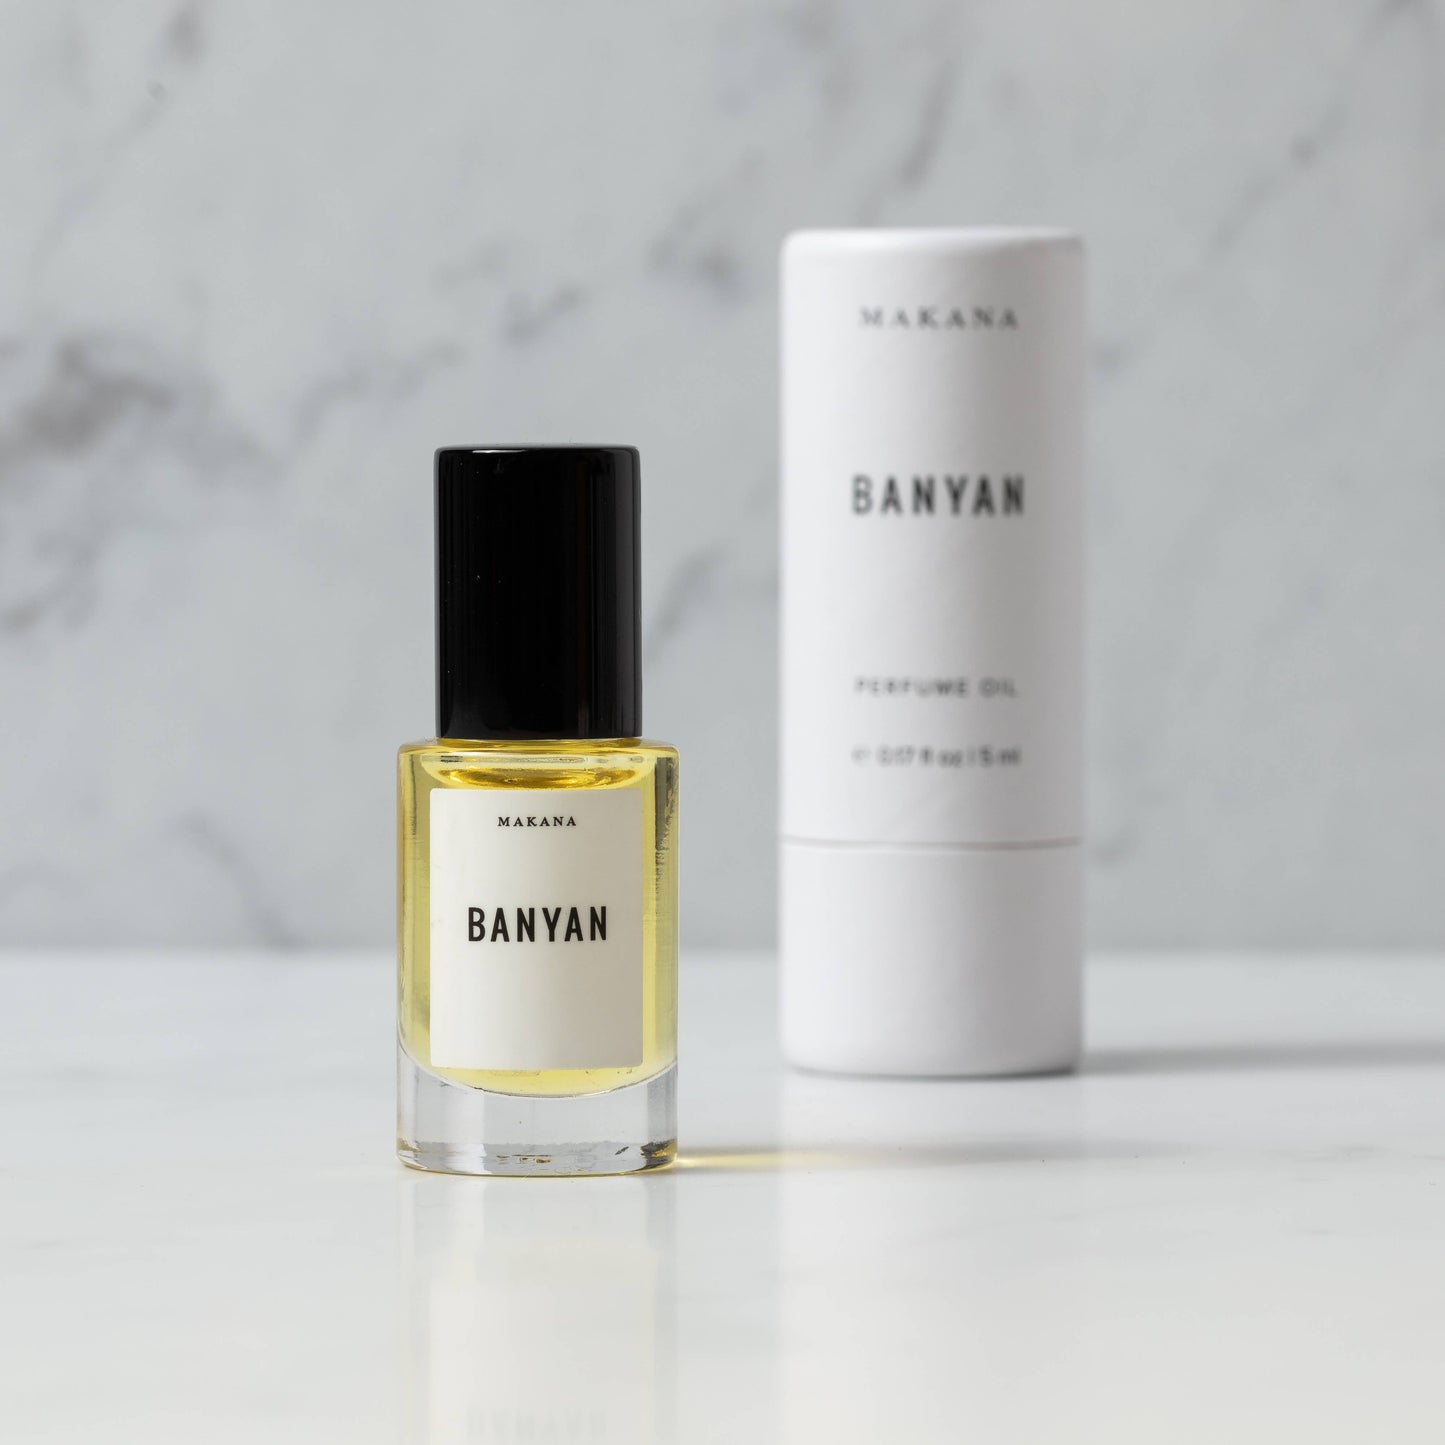 Makana - Banyan 5ml Perfume Oil